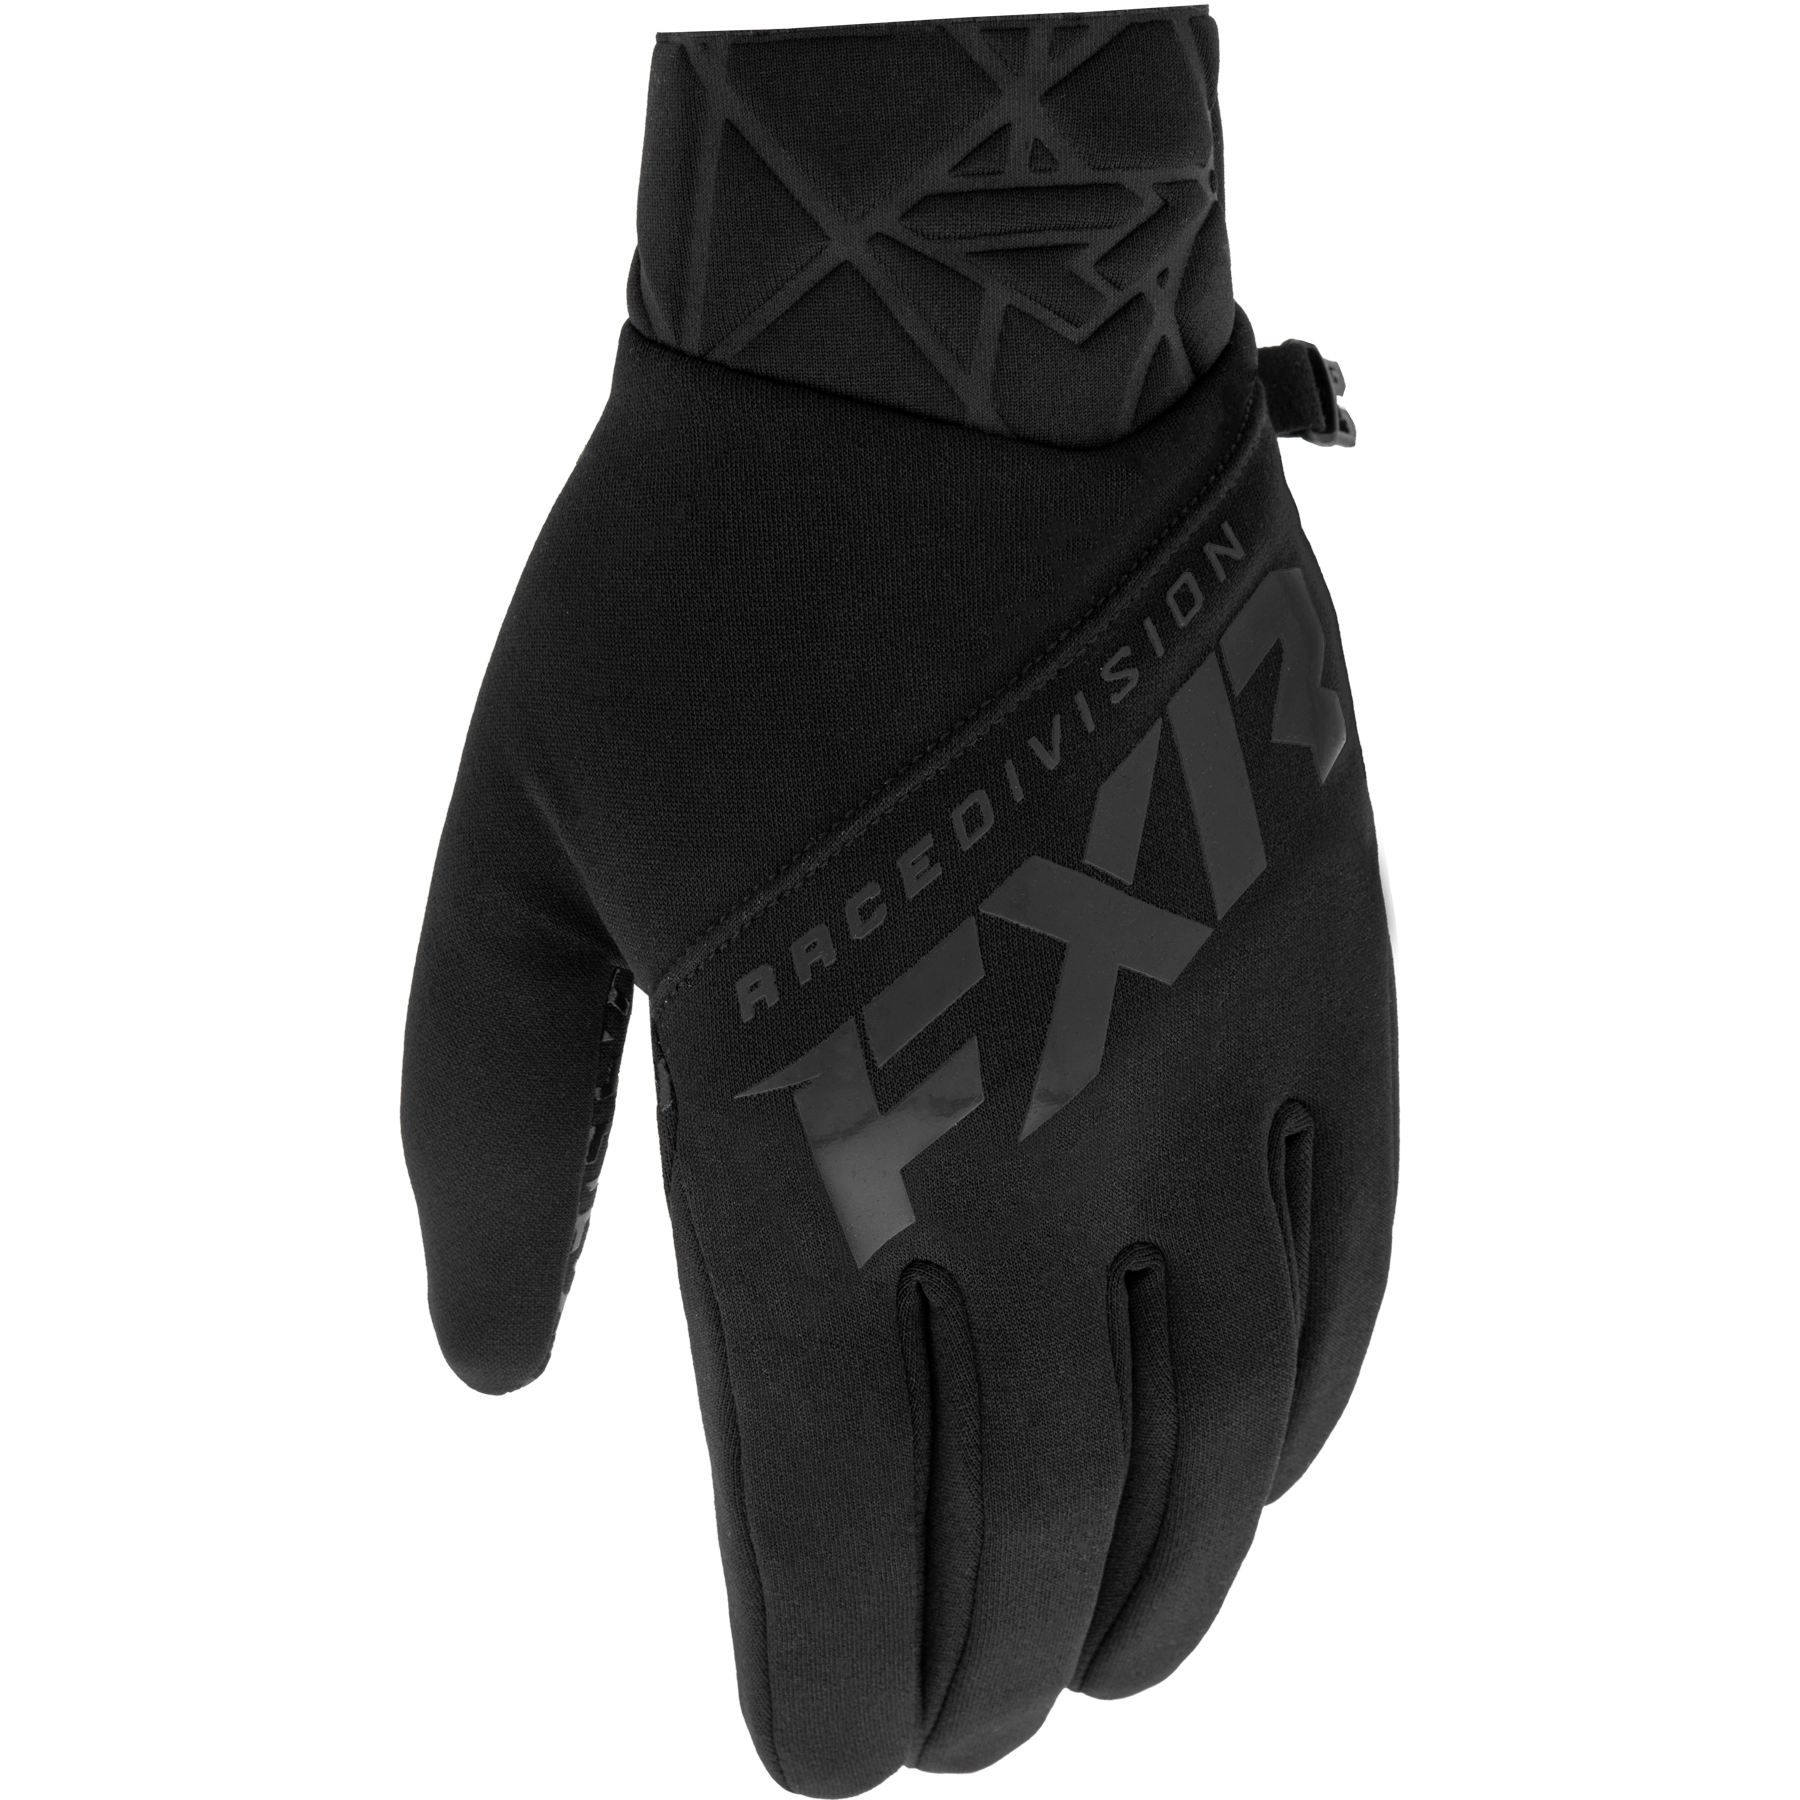 motoneige gants non-isolés par fxr racing men black ops